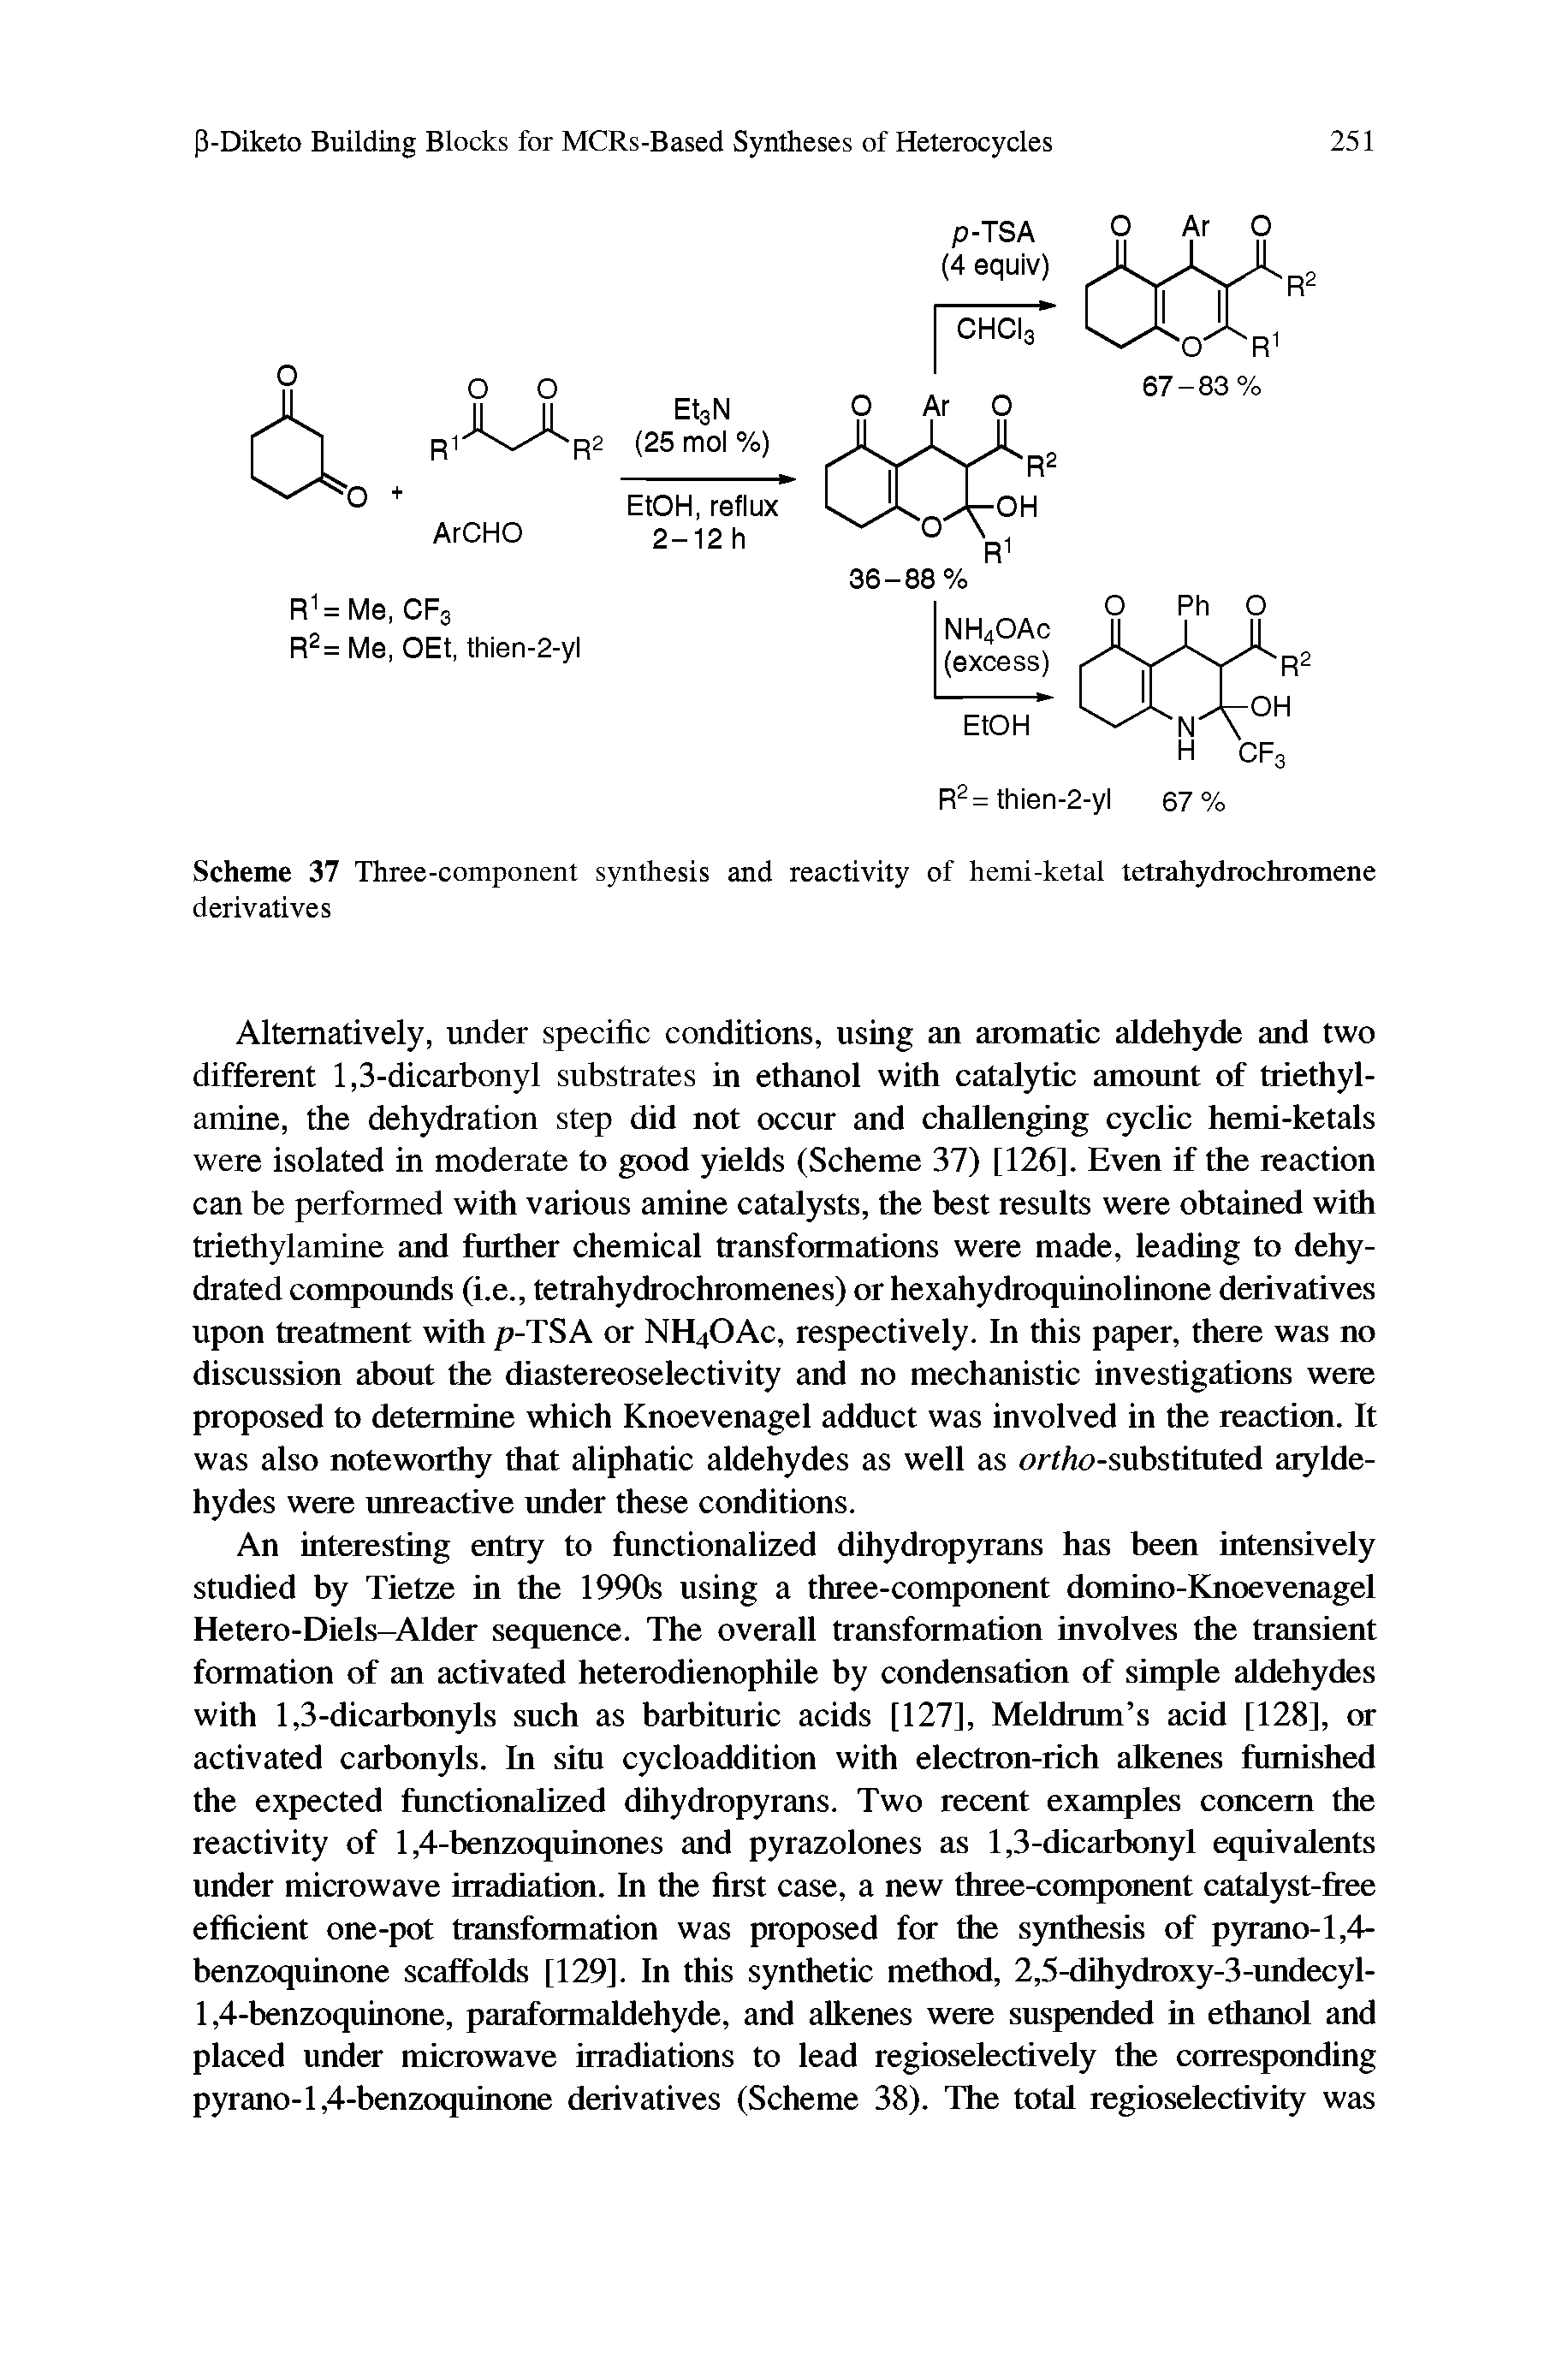 Scheme 37 Three-component synthesis and reactivity of hemi-ketal tetrahydrochromene derivatives...